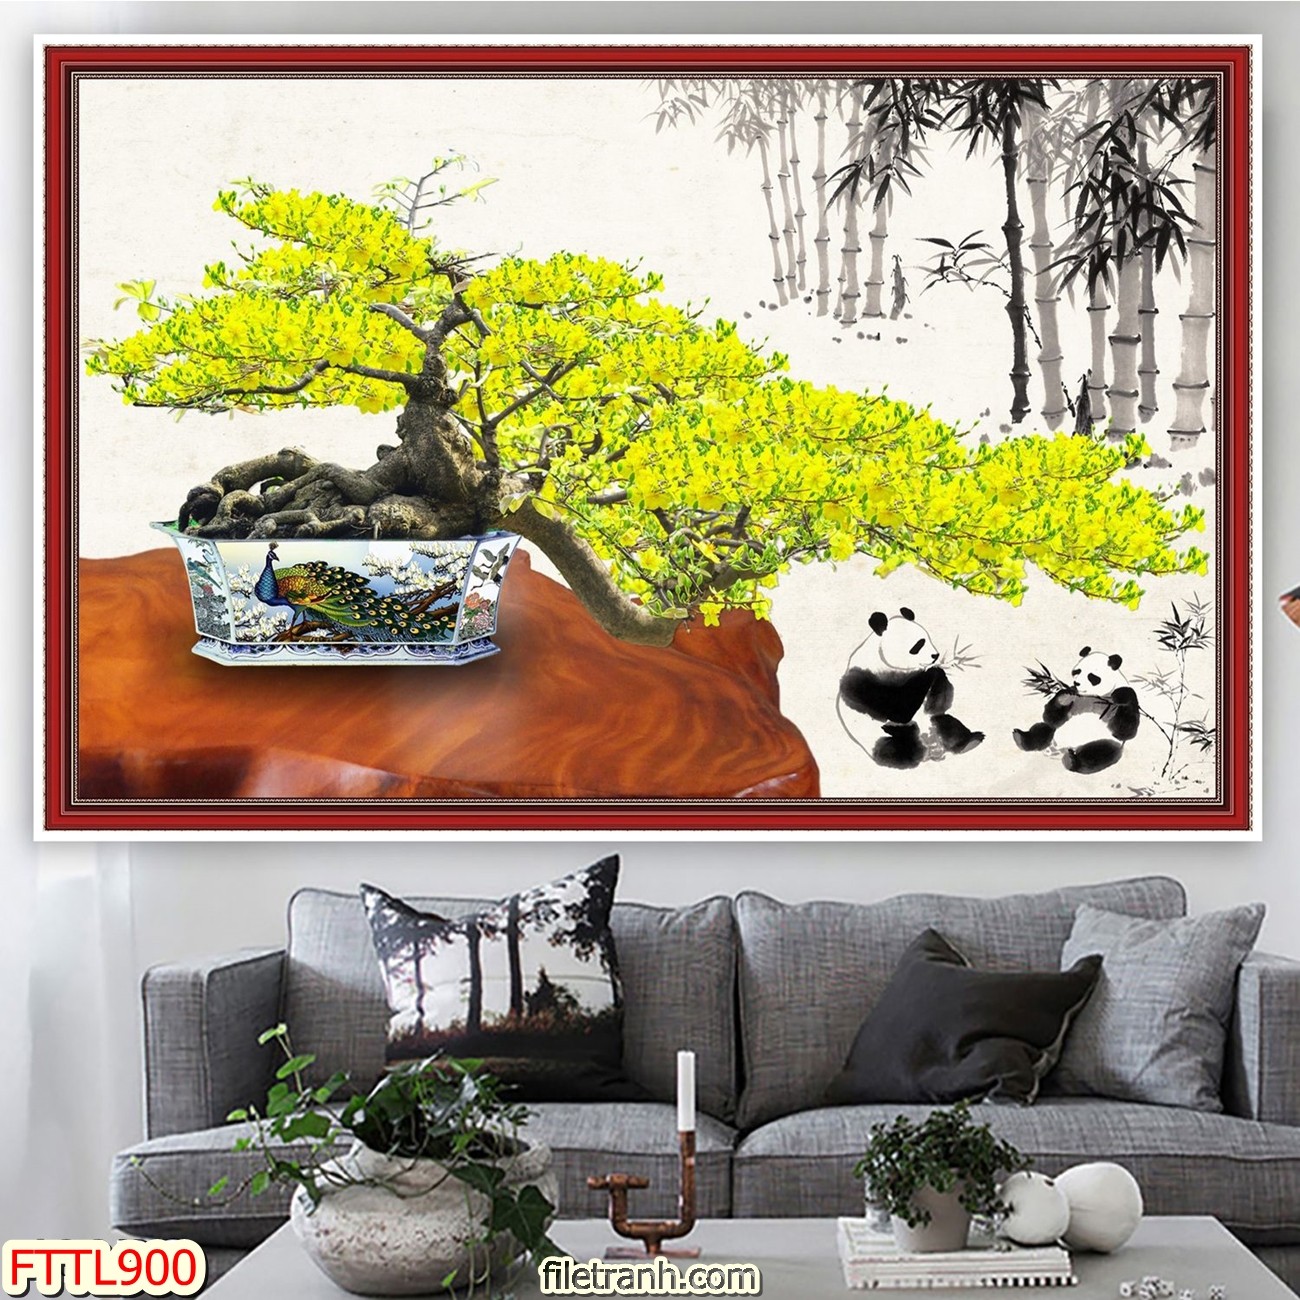 http://filetranh.com/file-tranh-chau-mai-bonsai/file-tranh-chau-mai-bonsai-fttl900.html